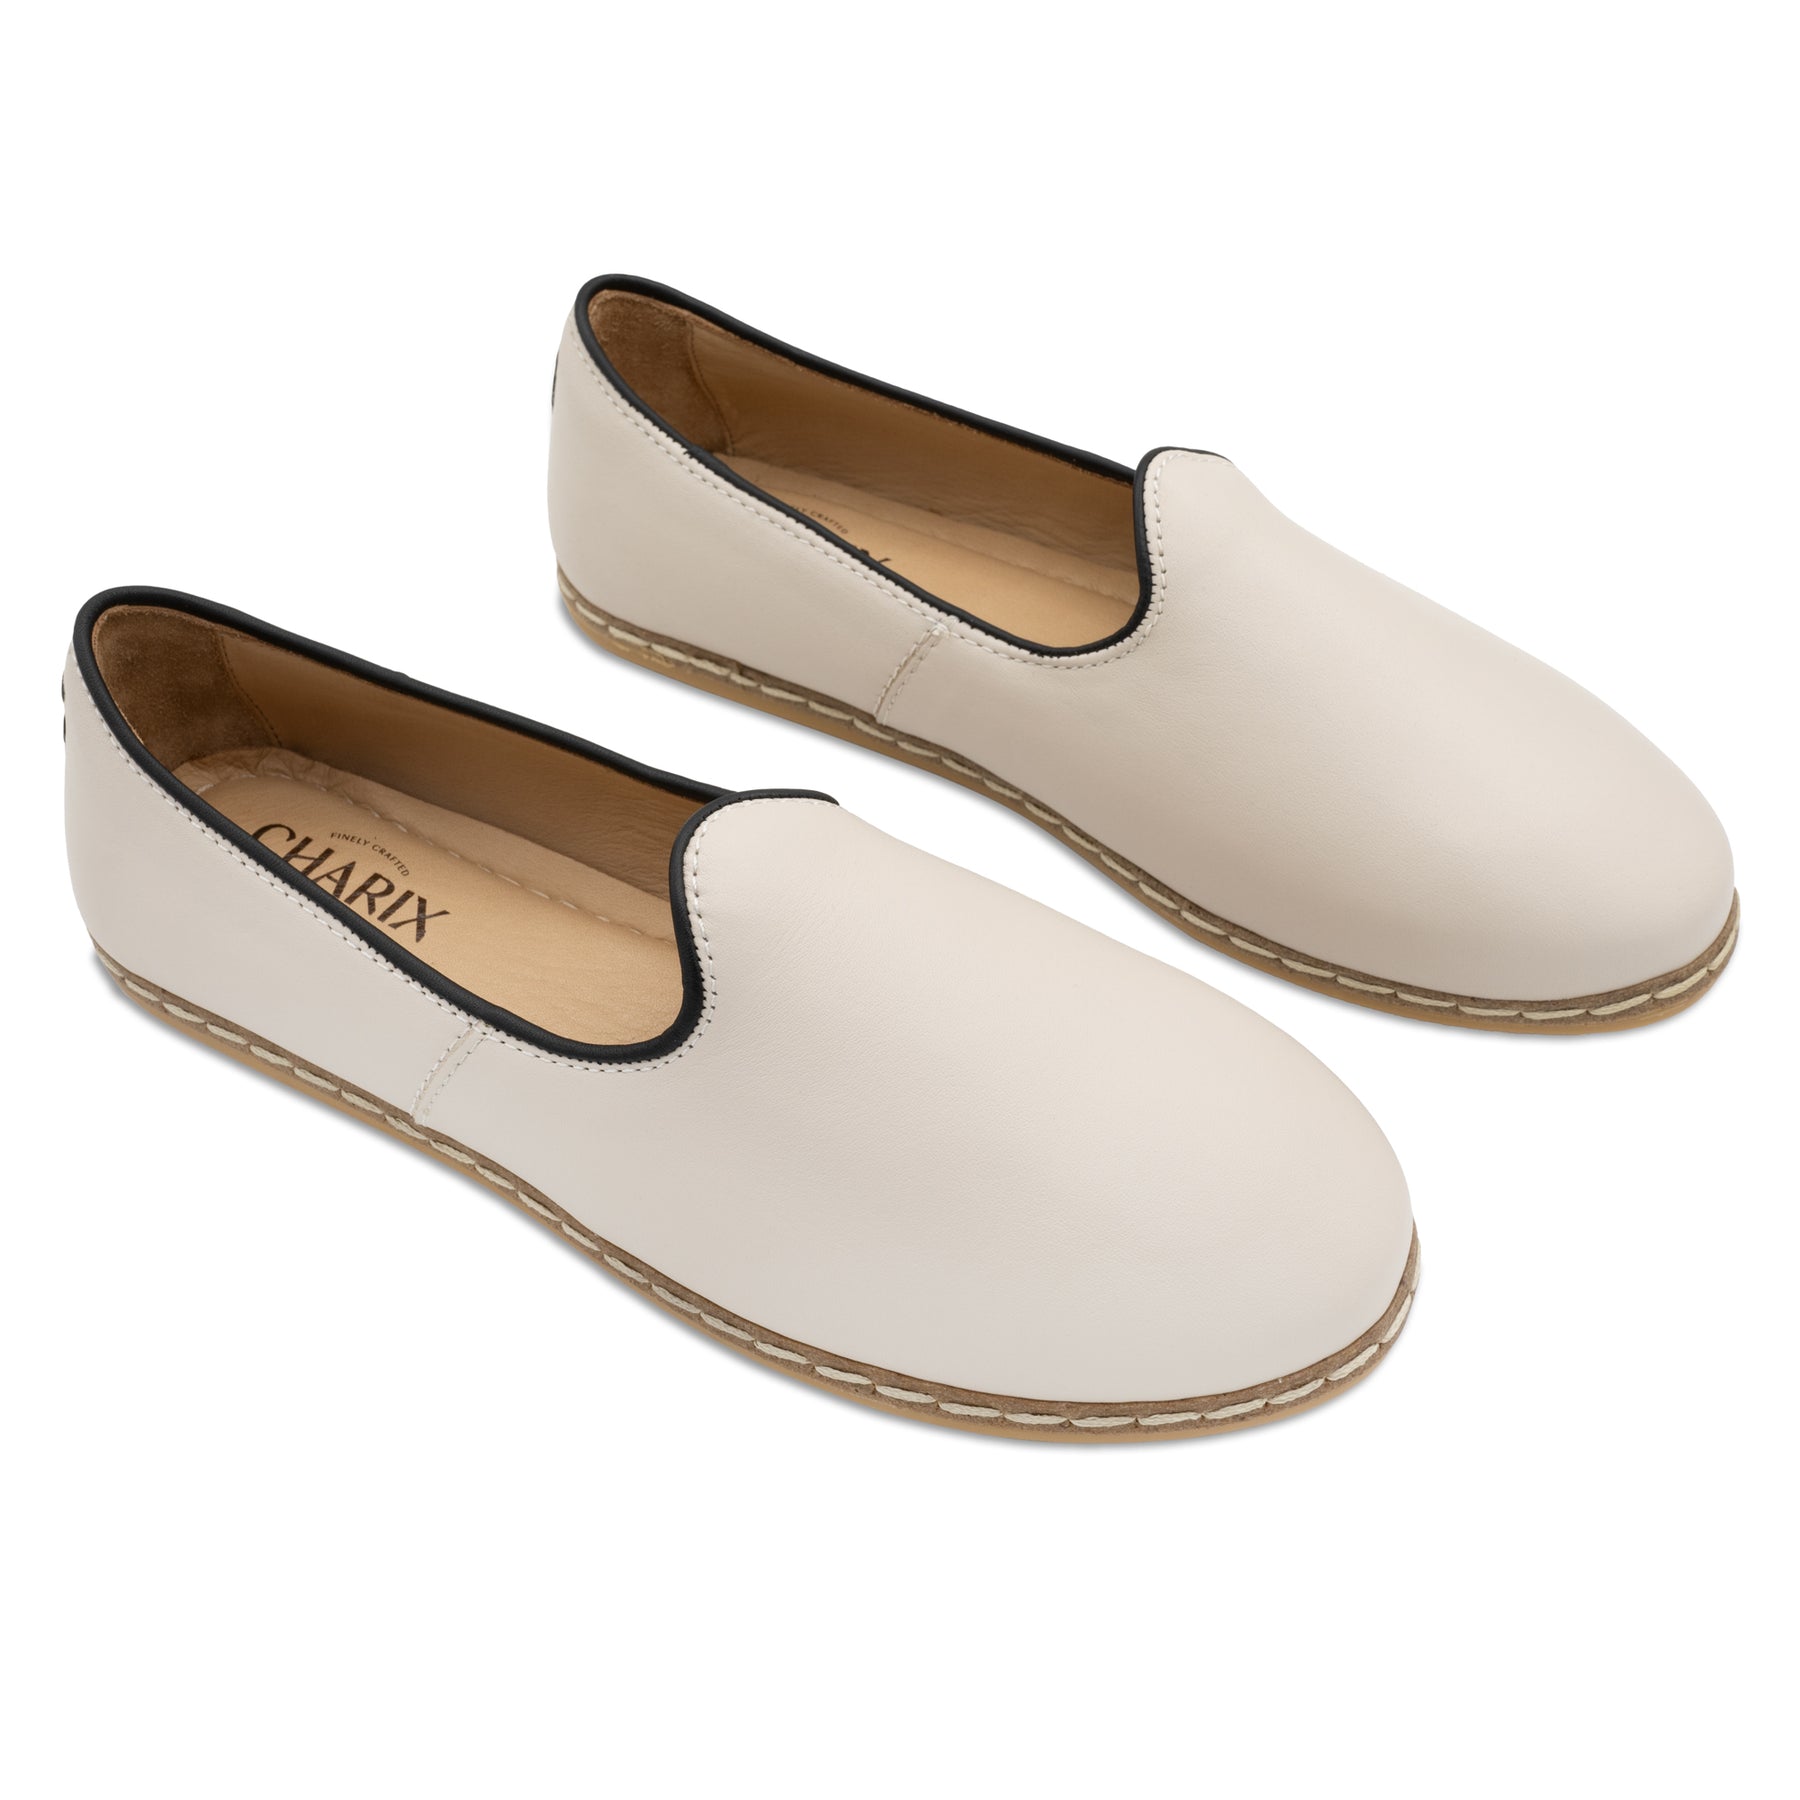 Cream Slip Ons for Men - Charix Shoes